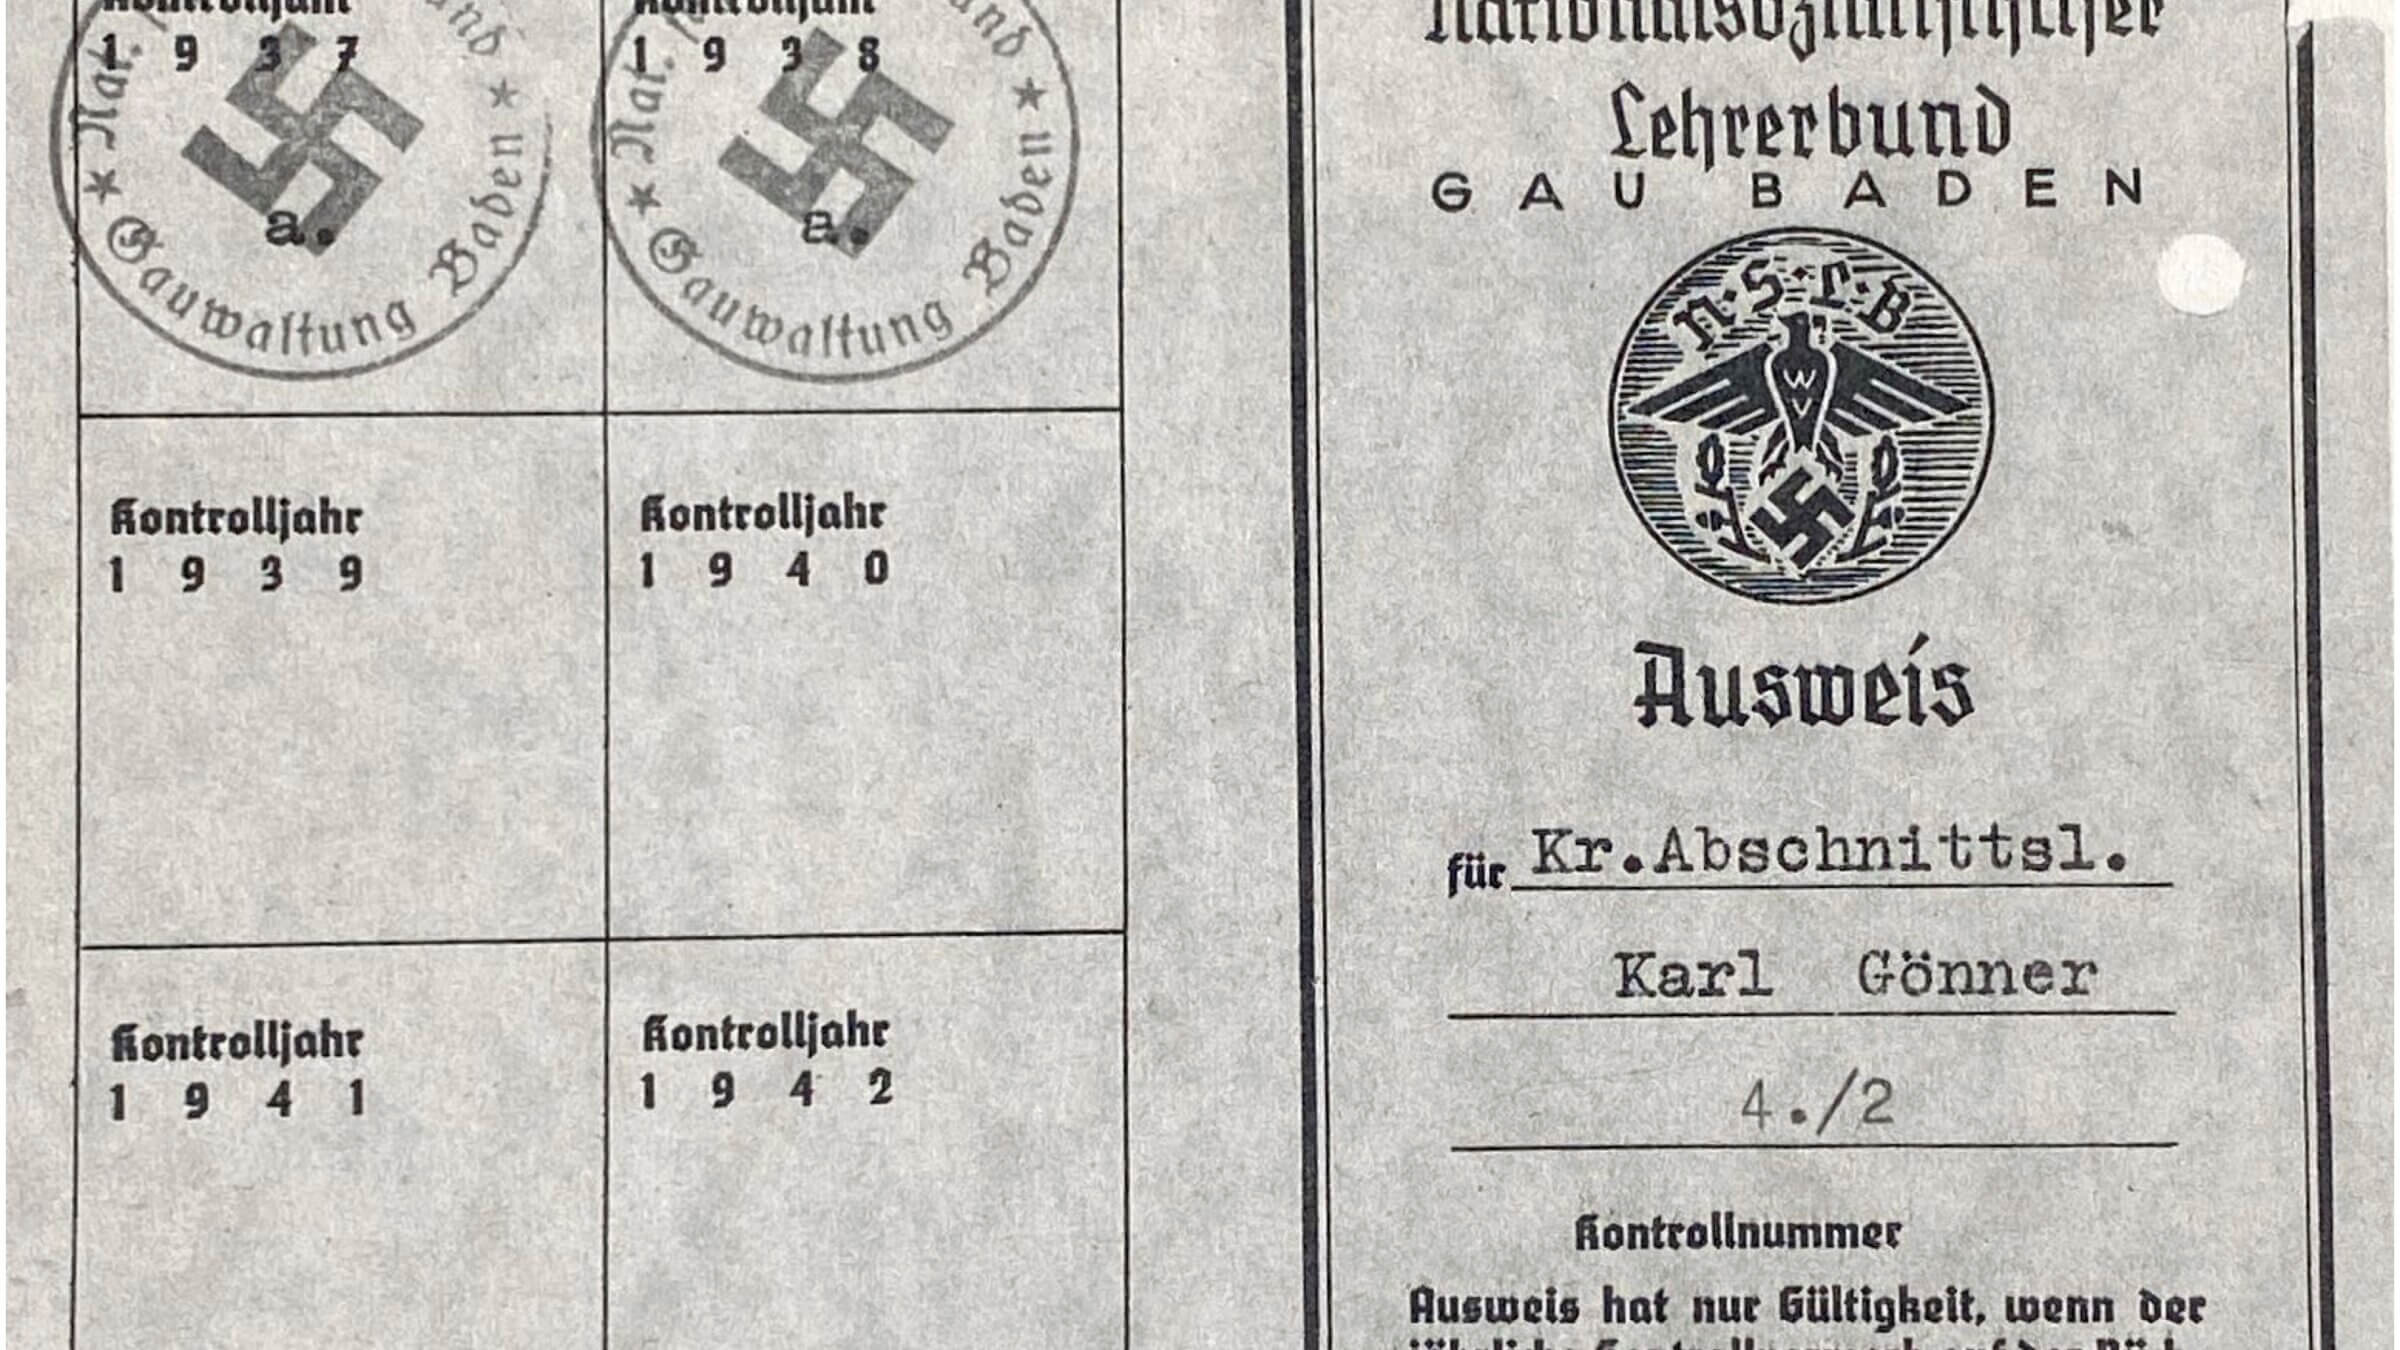 The Nazi membership card of Karl Gönner, who was Burkhard Bilger's maternal grandfather.